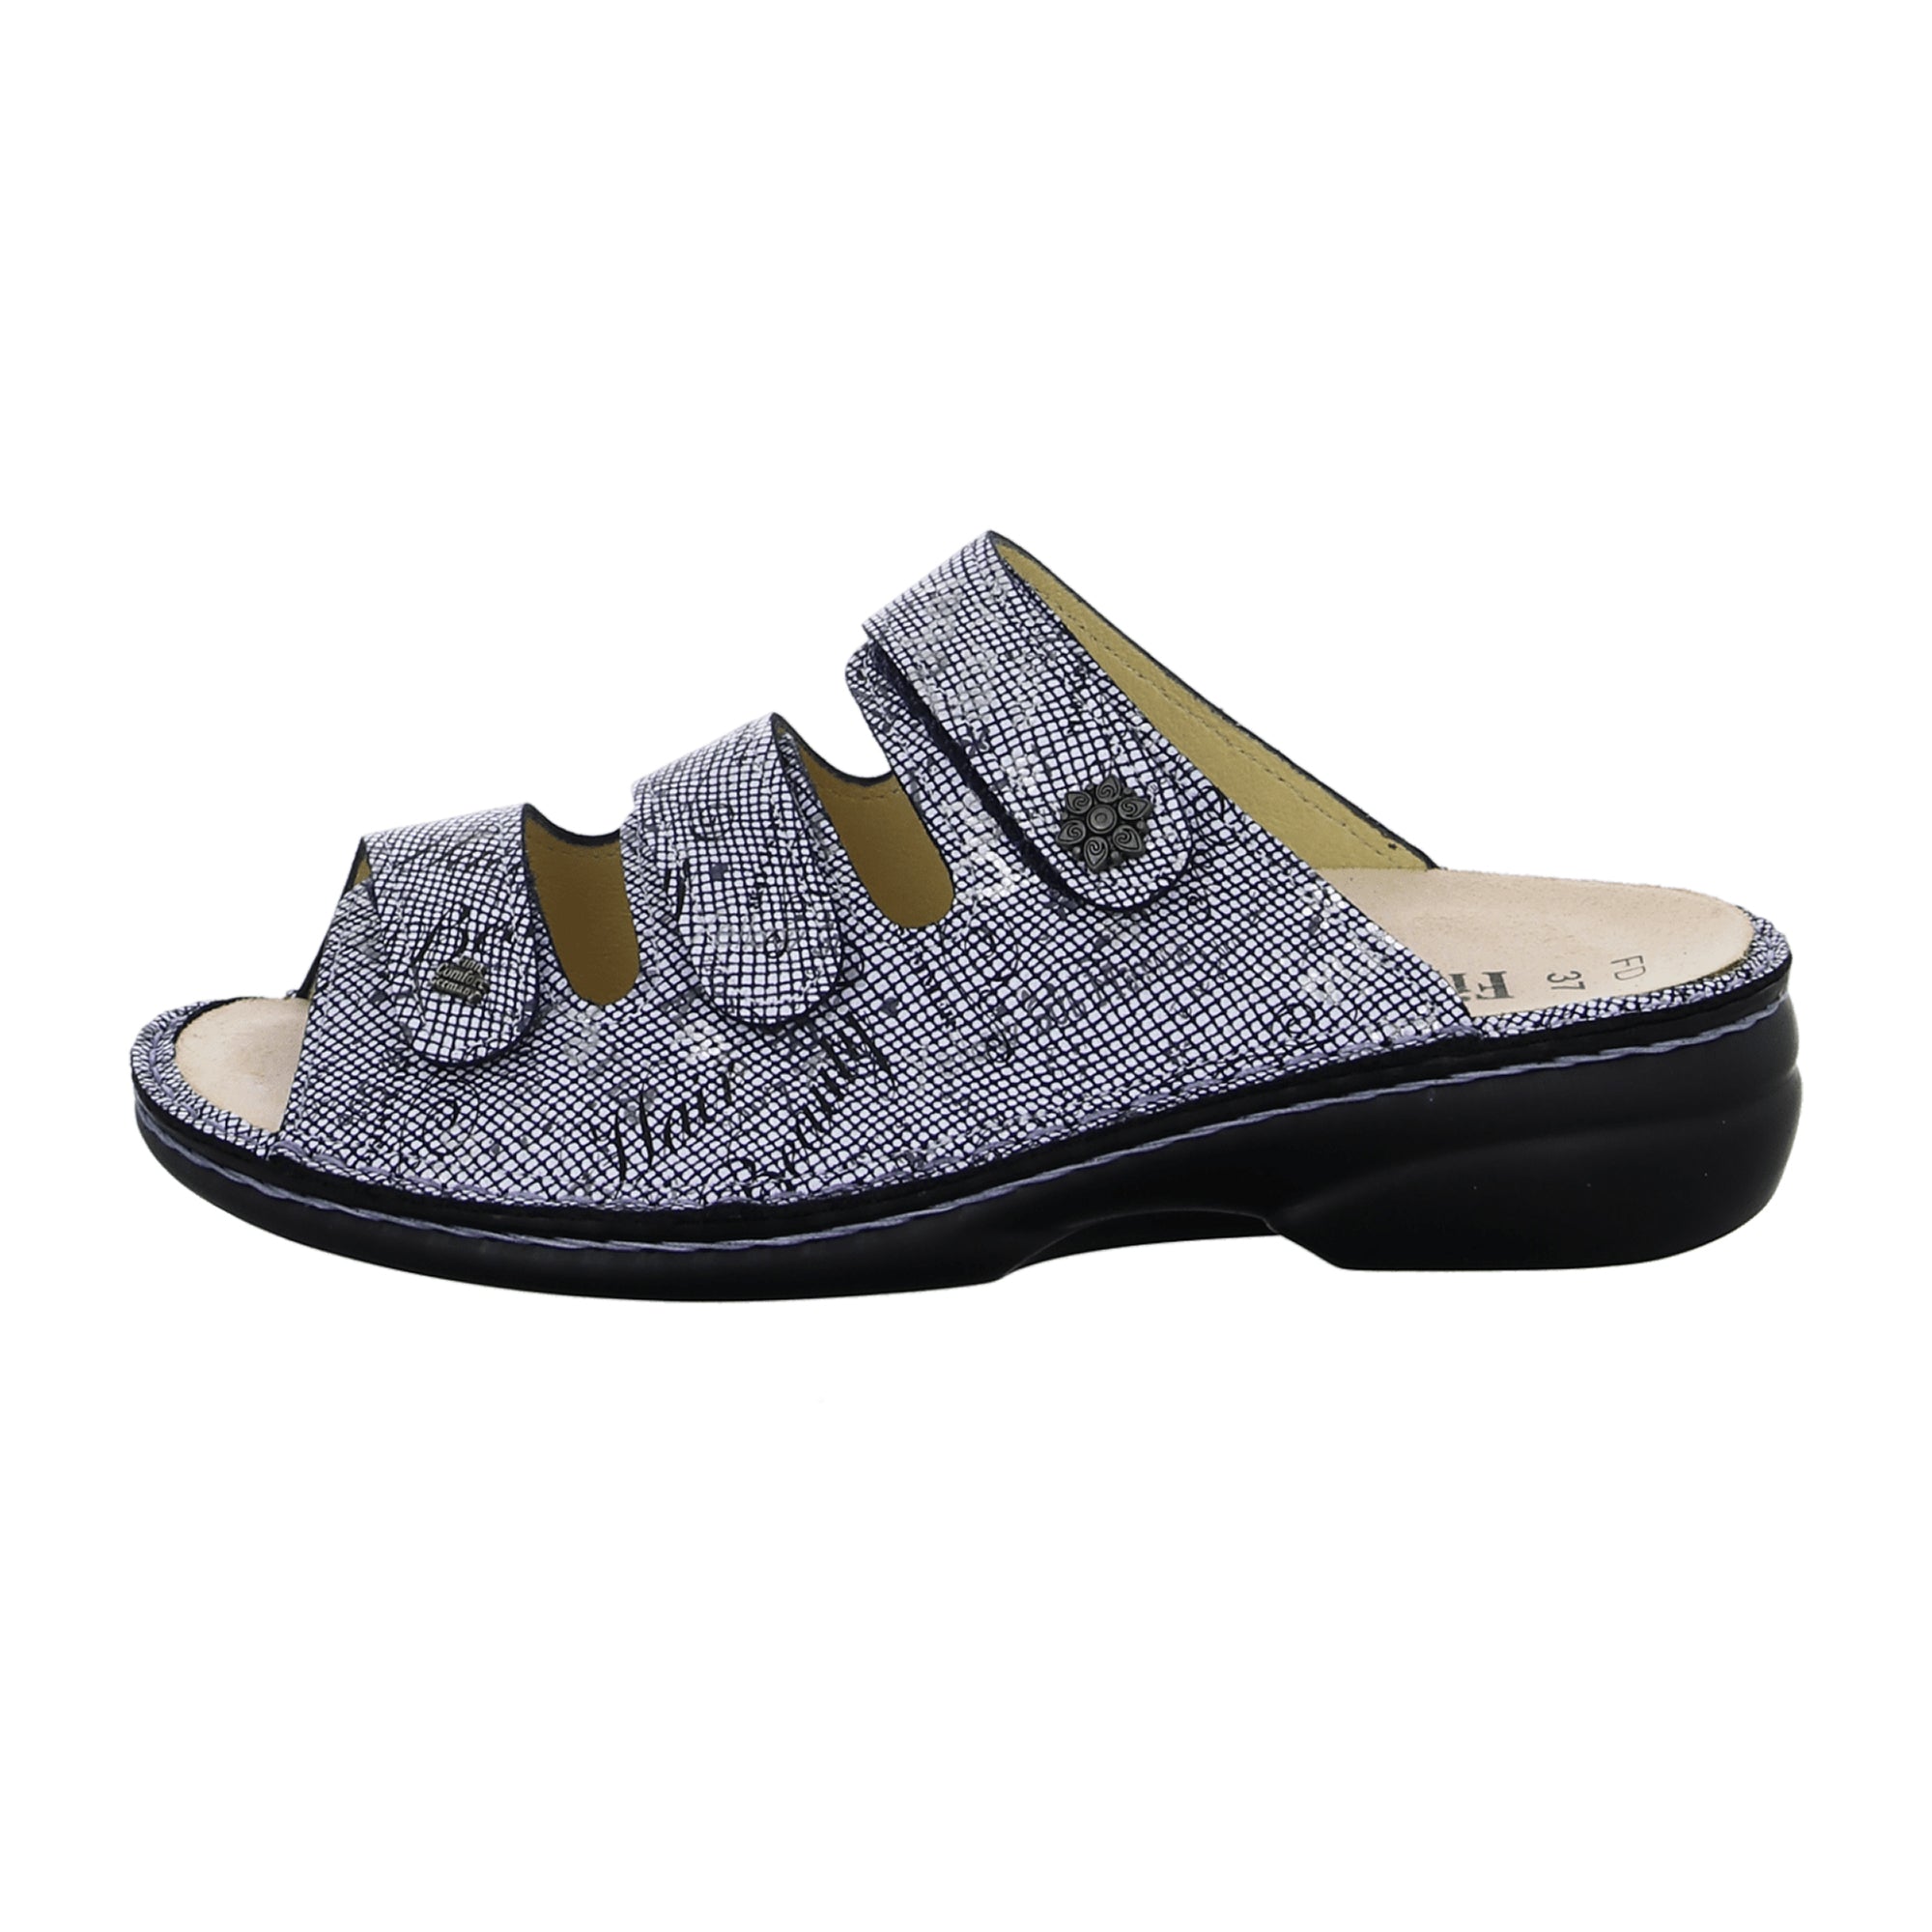 Finn Comfort Menorca-S Blue Sandals for Women – Stylish & Comfortable